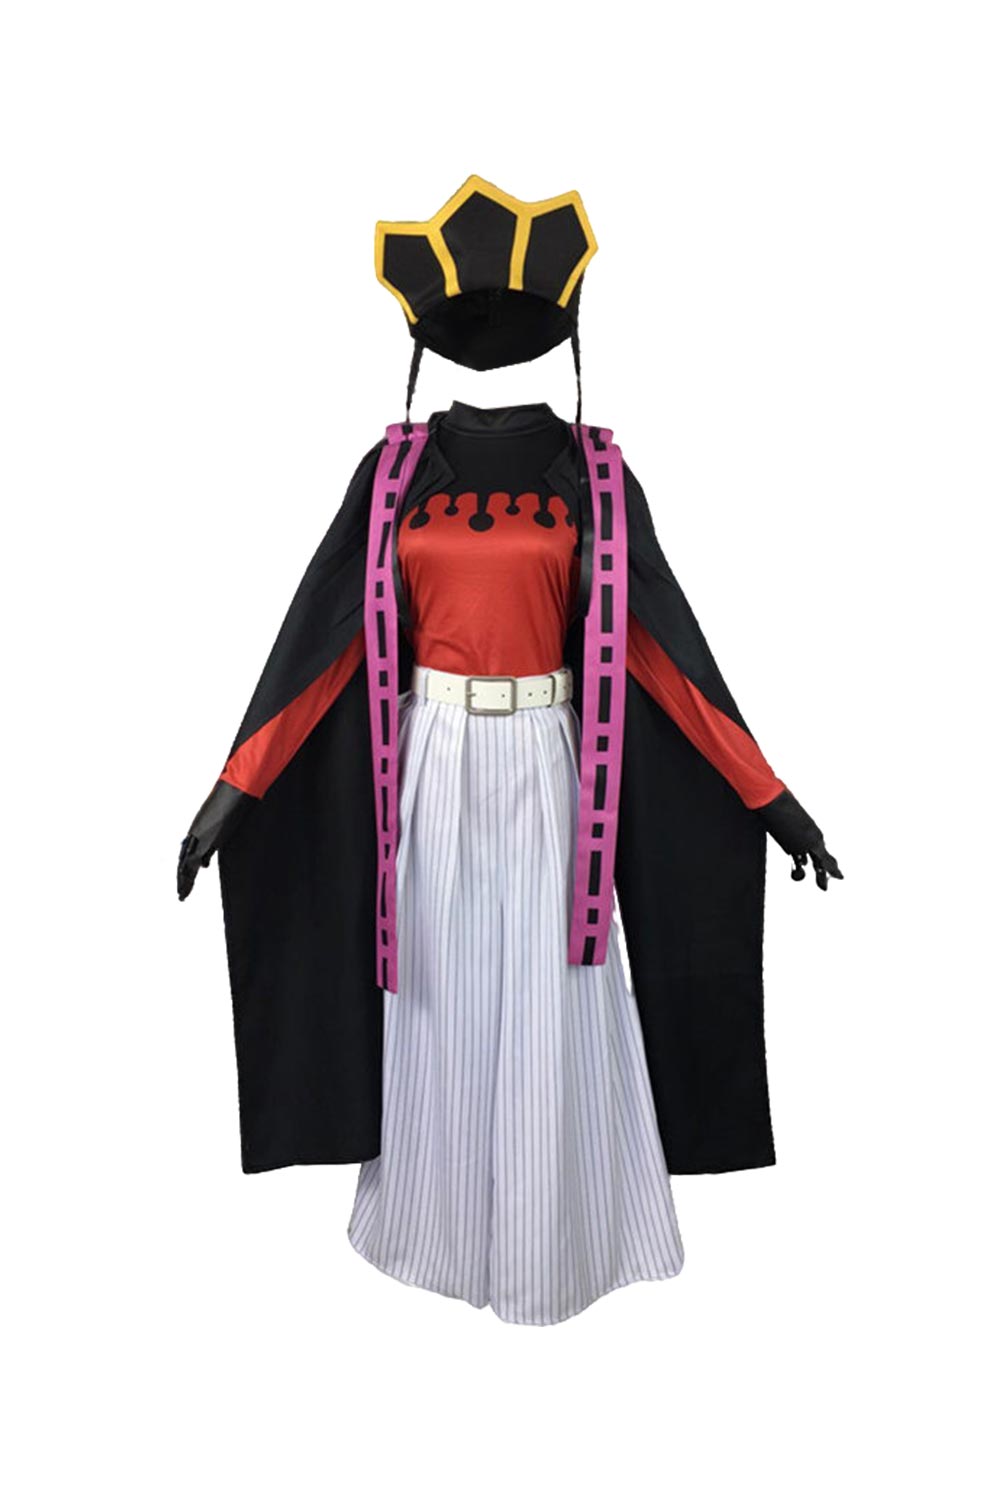 Anime Demon Slayer: Kimetsu no Yaiba Douma Outfits Halloween Carnival Suit Cosplay Costume